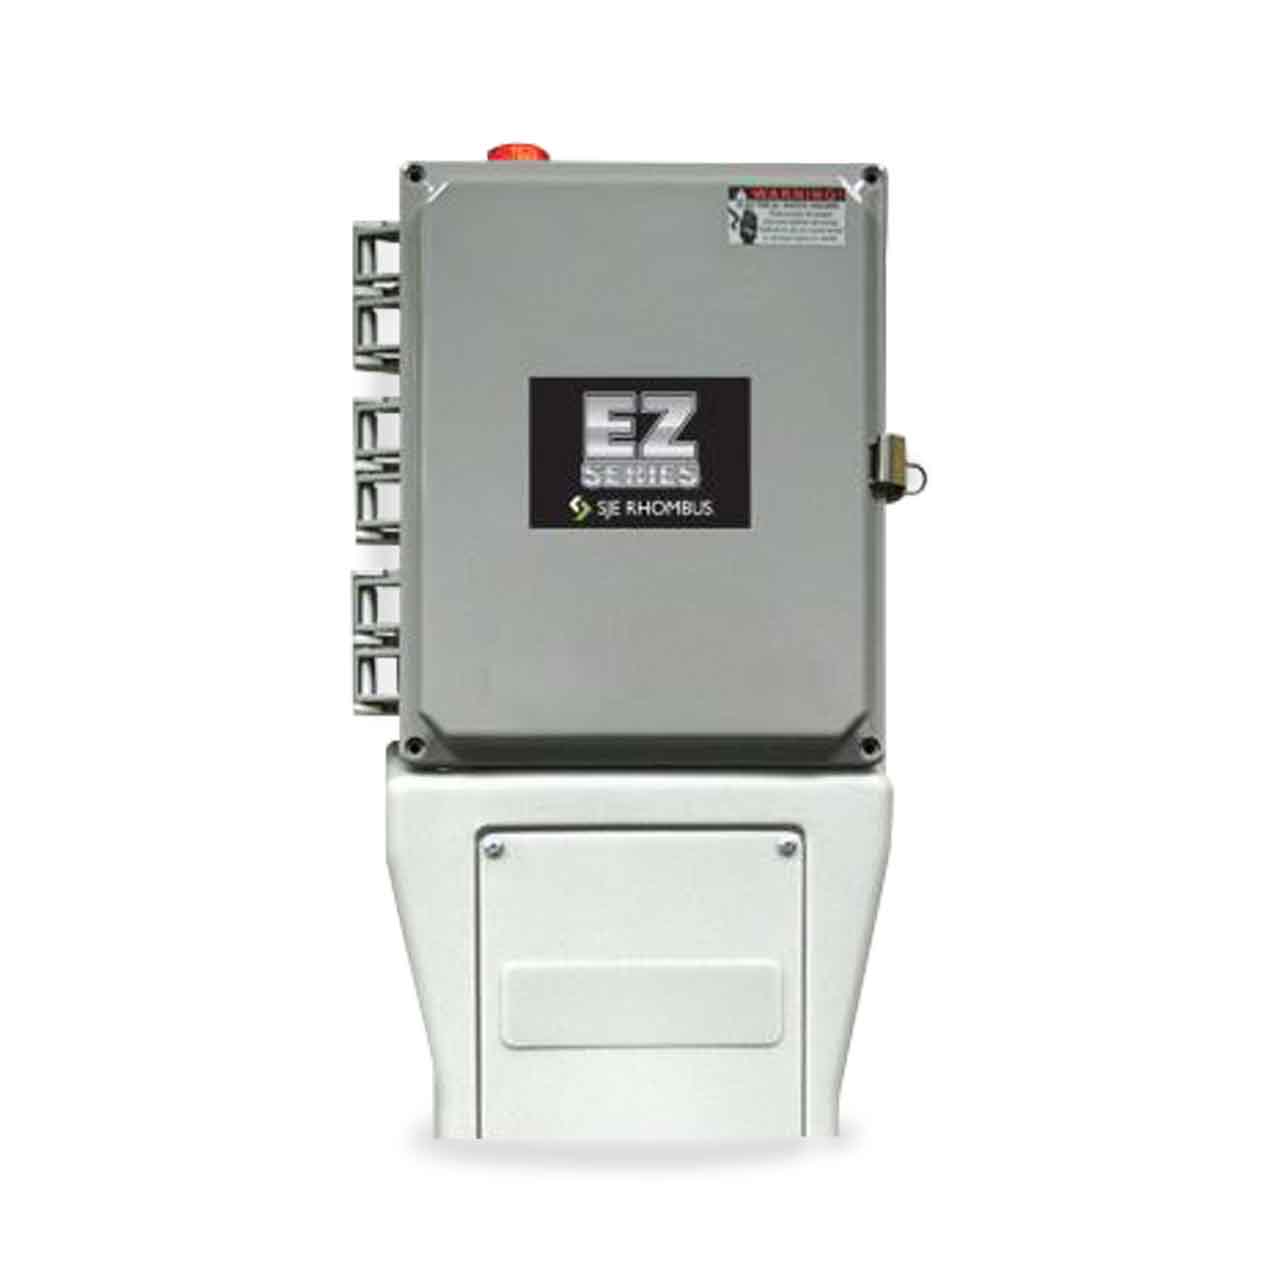 SJERhombus EZP Series Plugger Plugin Pump Control Panel SJE Rhombus